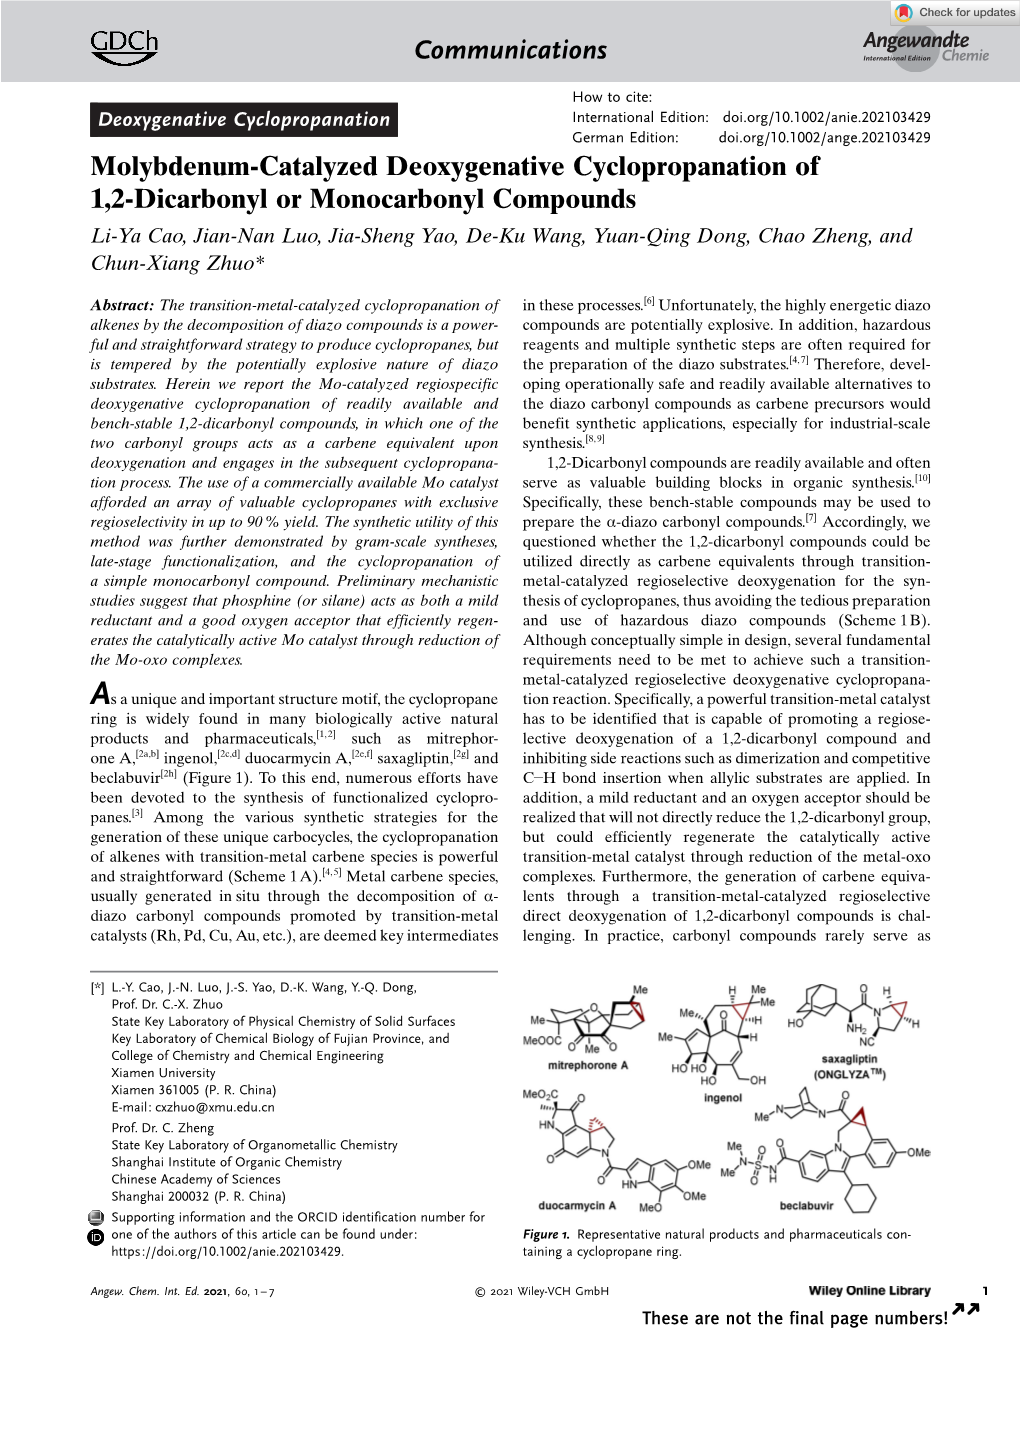 Molybdenum‐Catalyzed Deoxygenative Cyclopropanation of 1,2